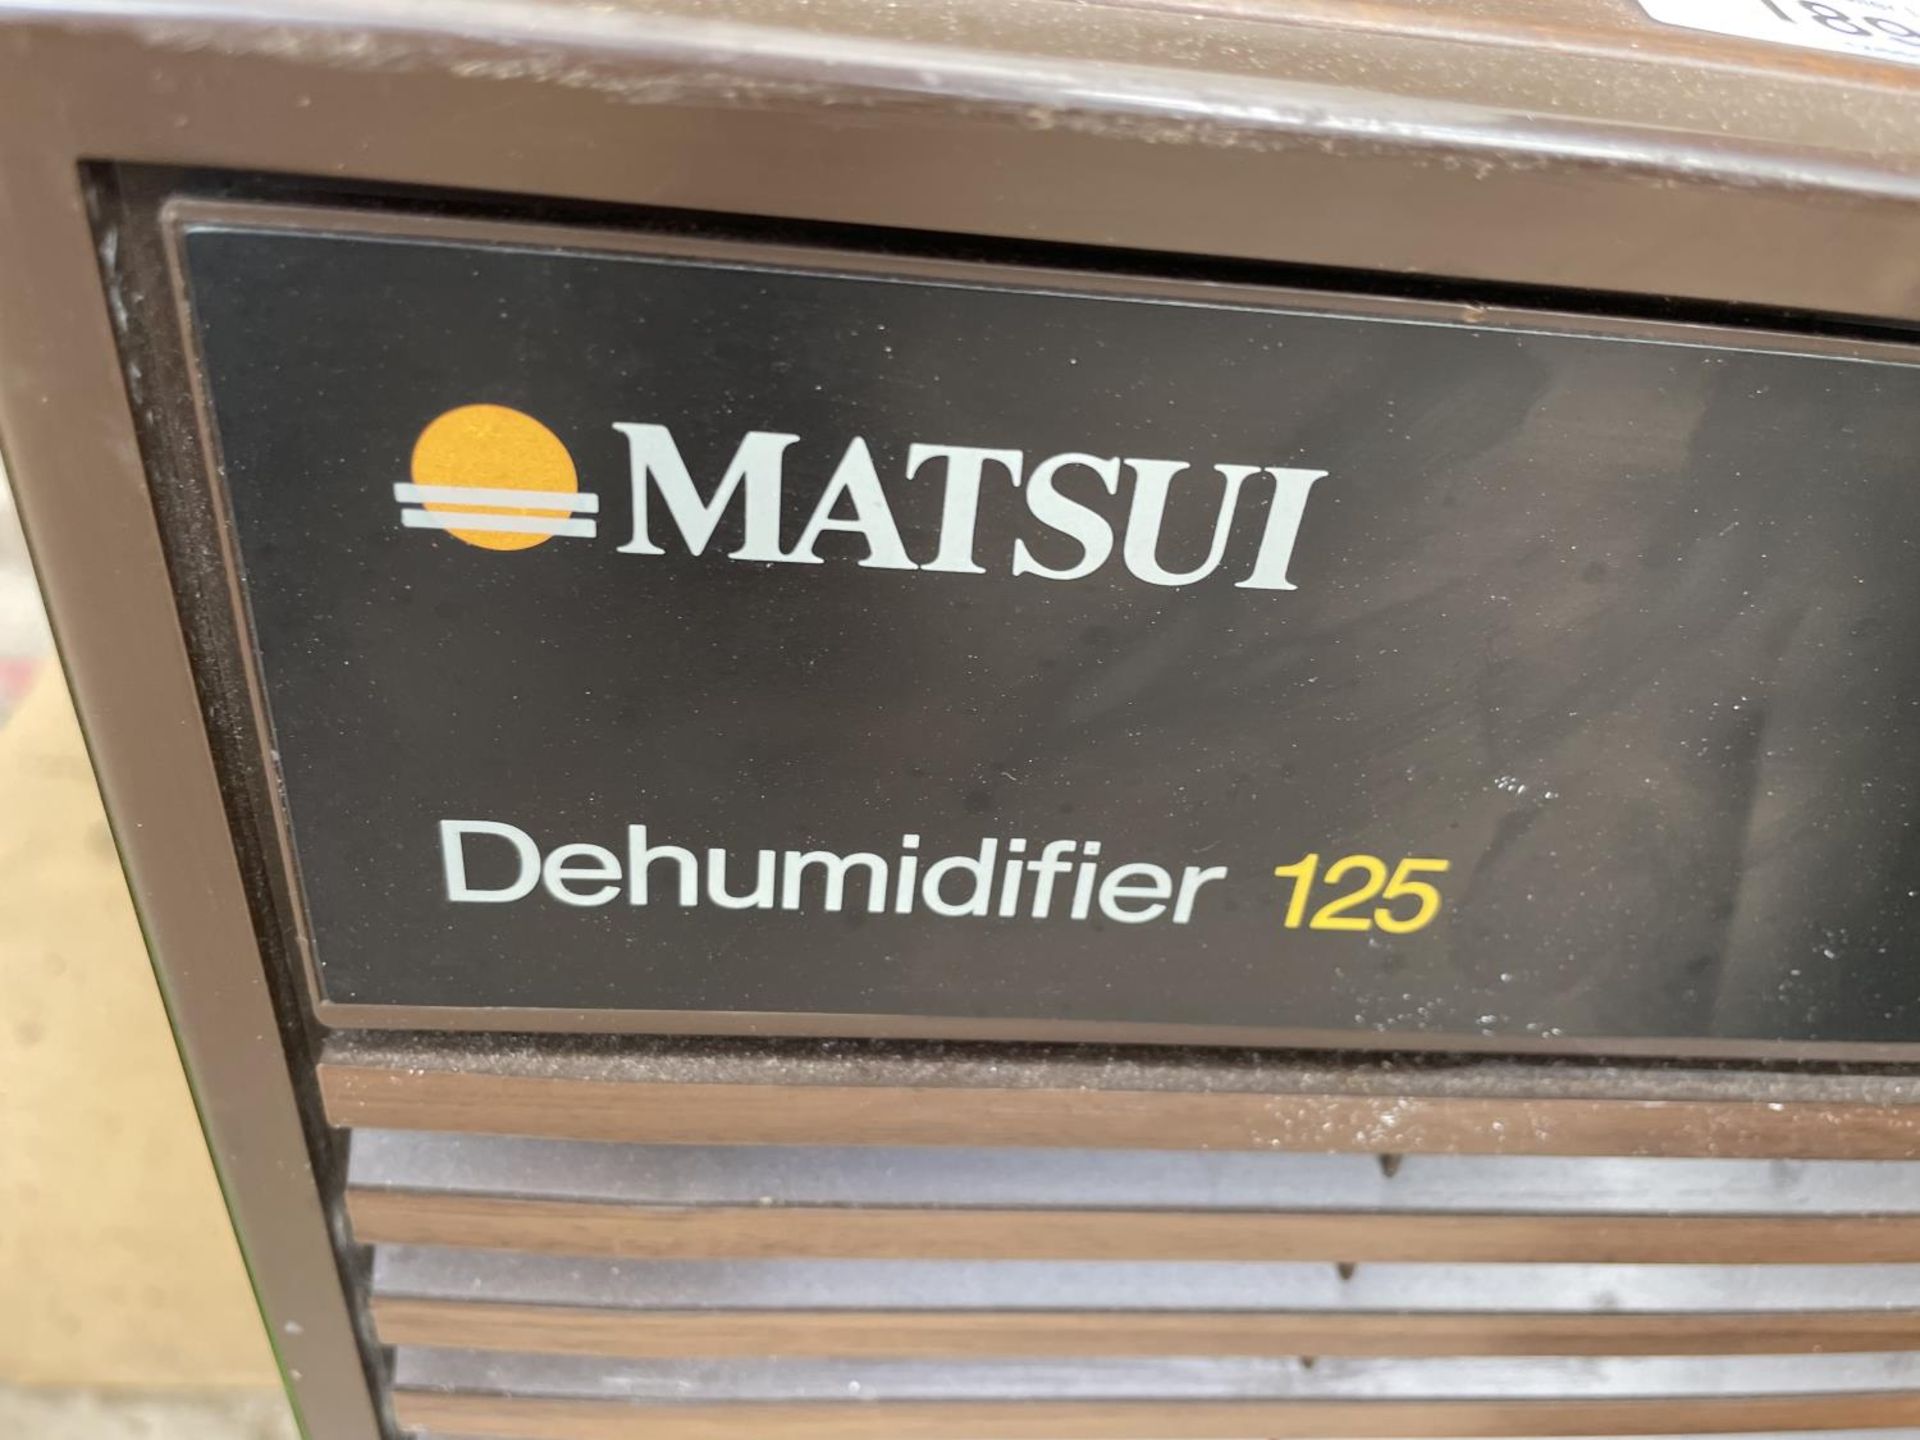 A MATSUI DEHUMIDIFER 125 - Image 2 of 2